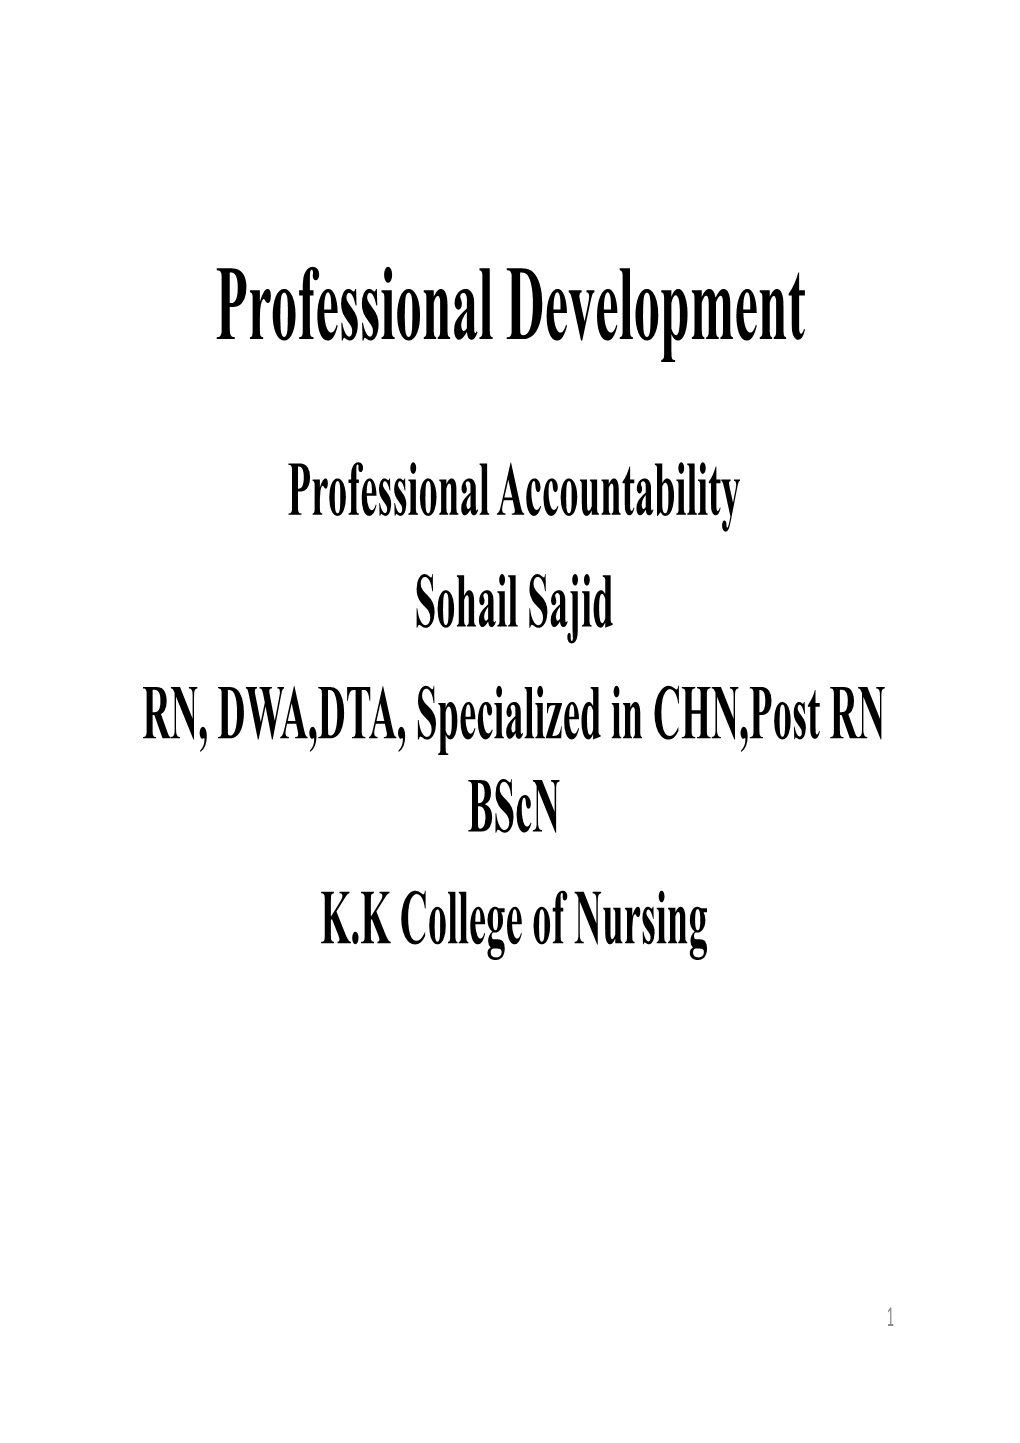 Professional Accountability Sohail Sajid RN, DWA,DTA, Specialized in CHN,Post RN Bscn K.K College of Nursing